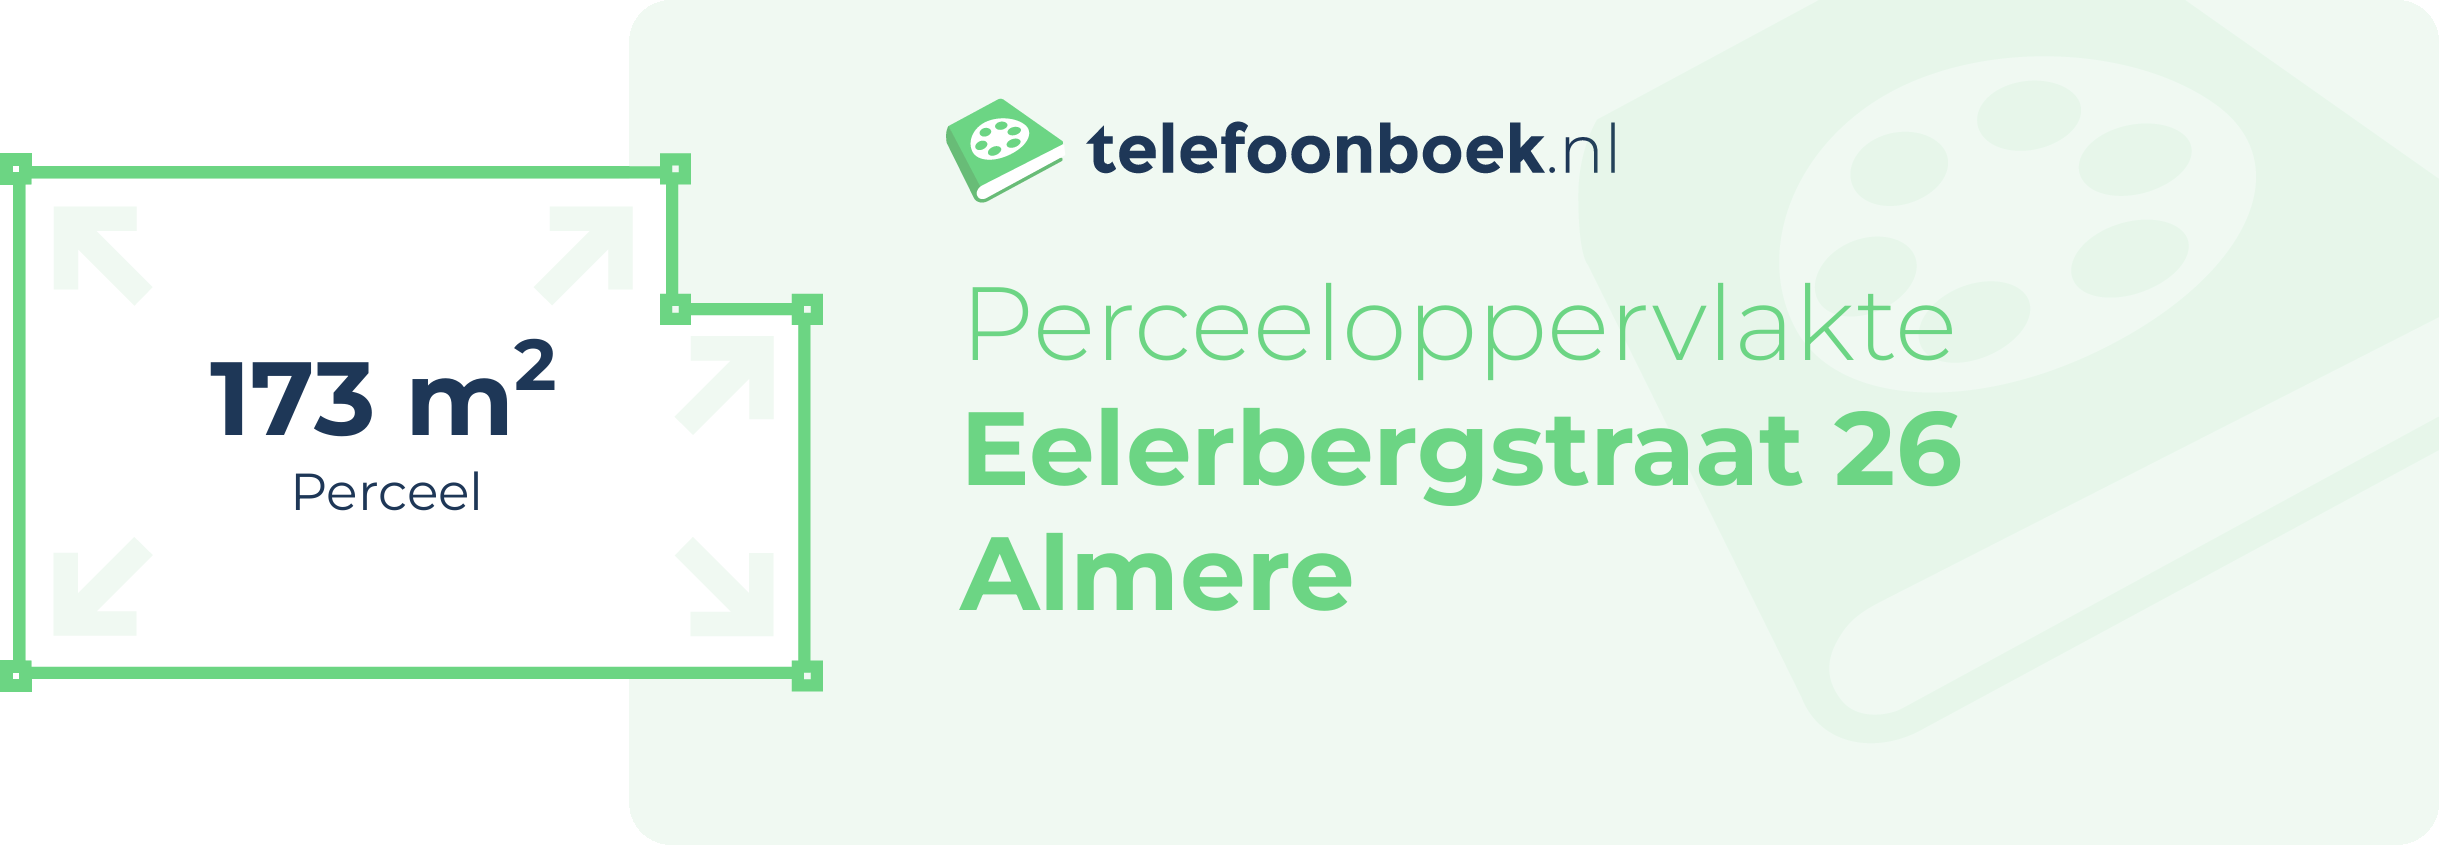 Perceeloppervlakte Eelerbergstraat 26 Almere